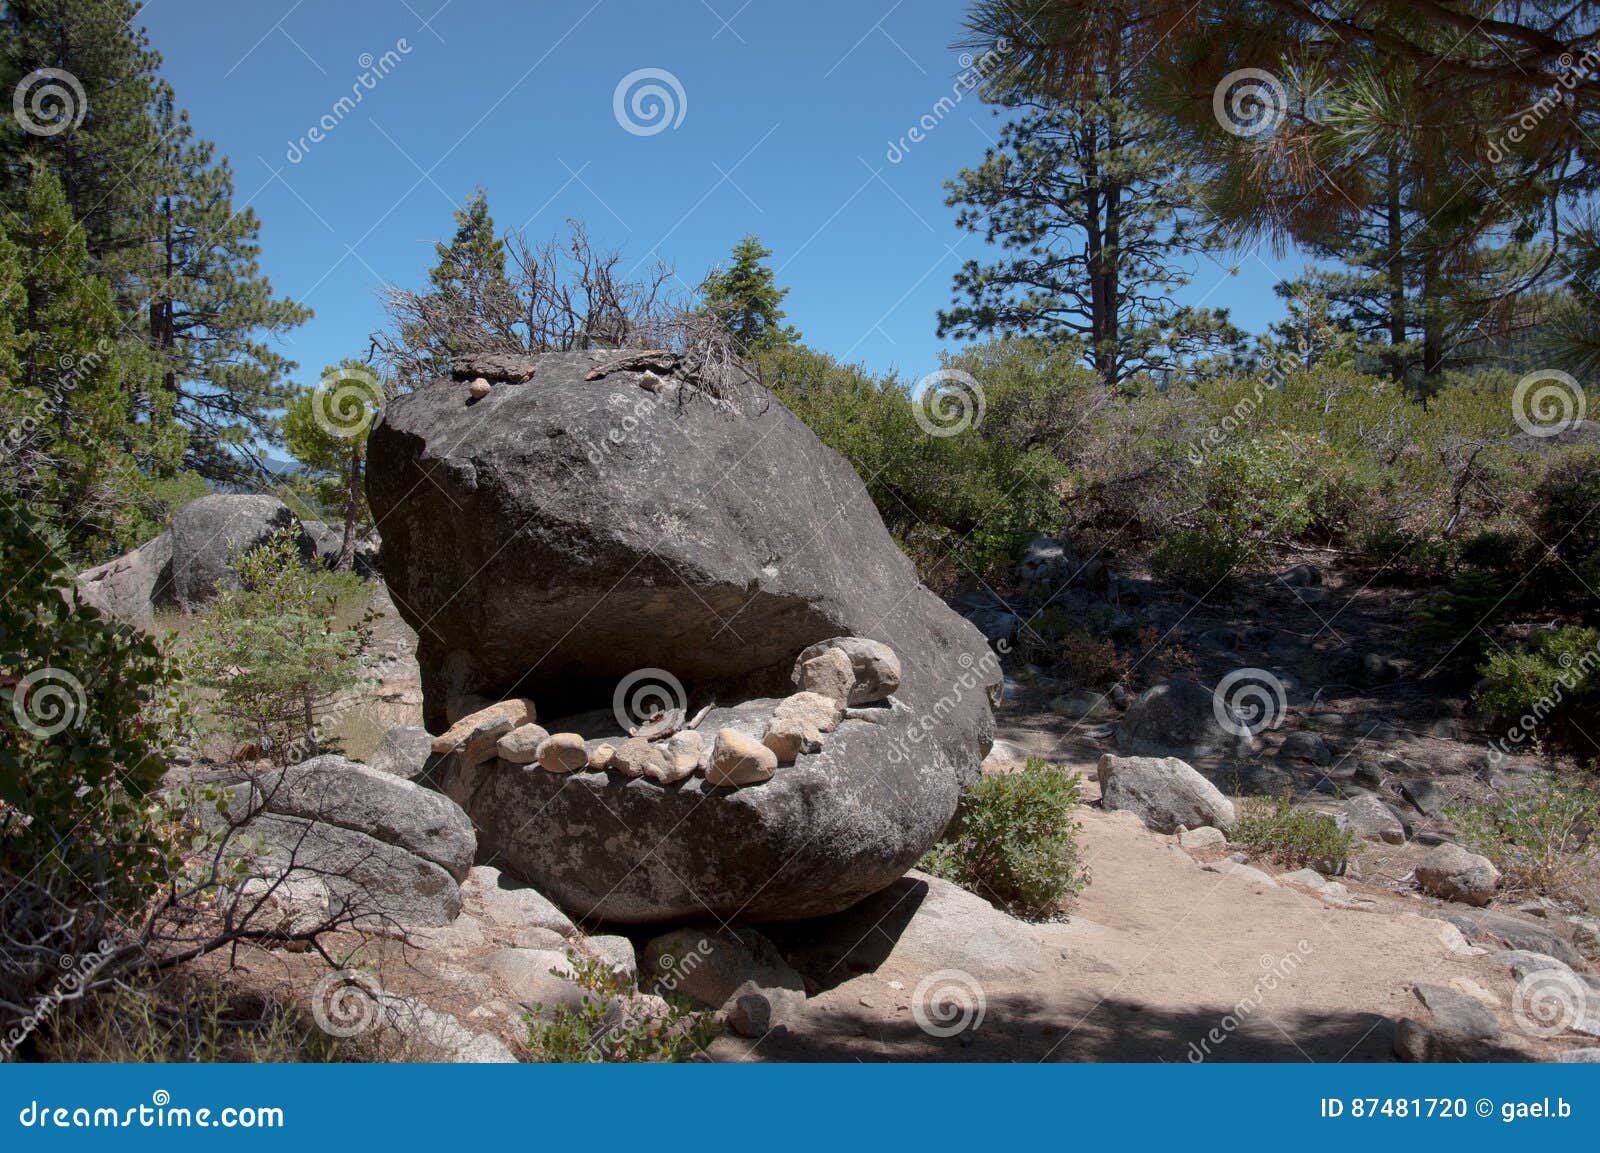 rock-monster of lake tahoe`s rubicon trail